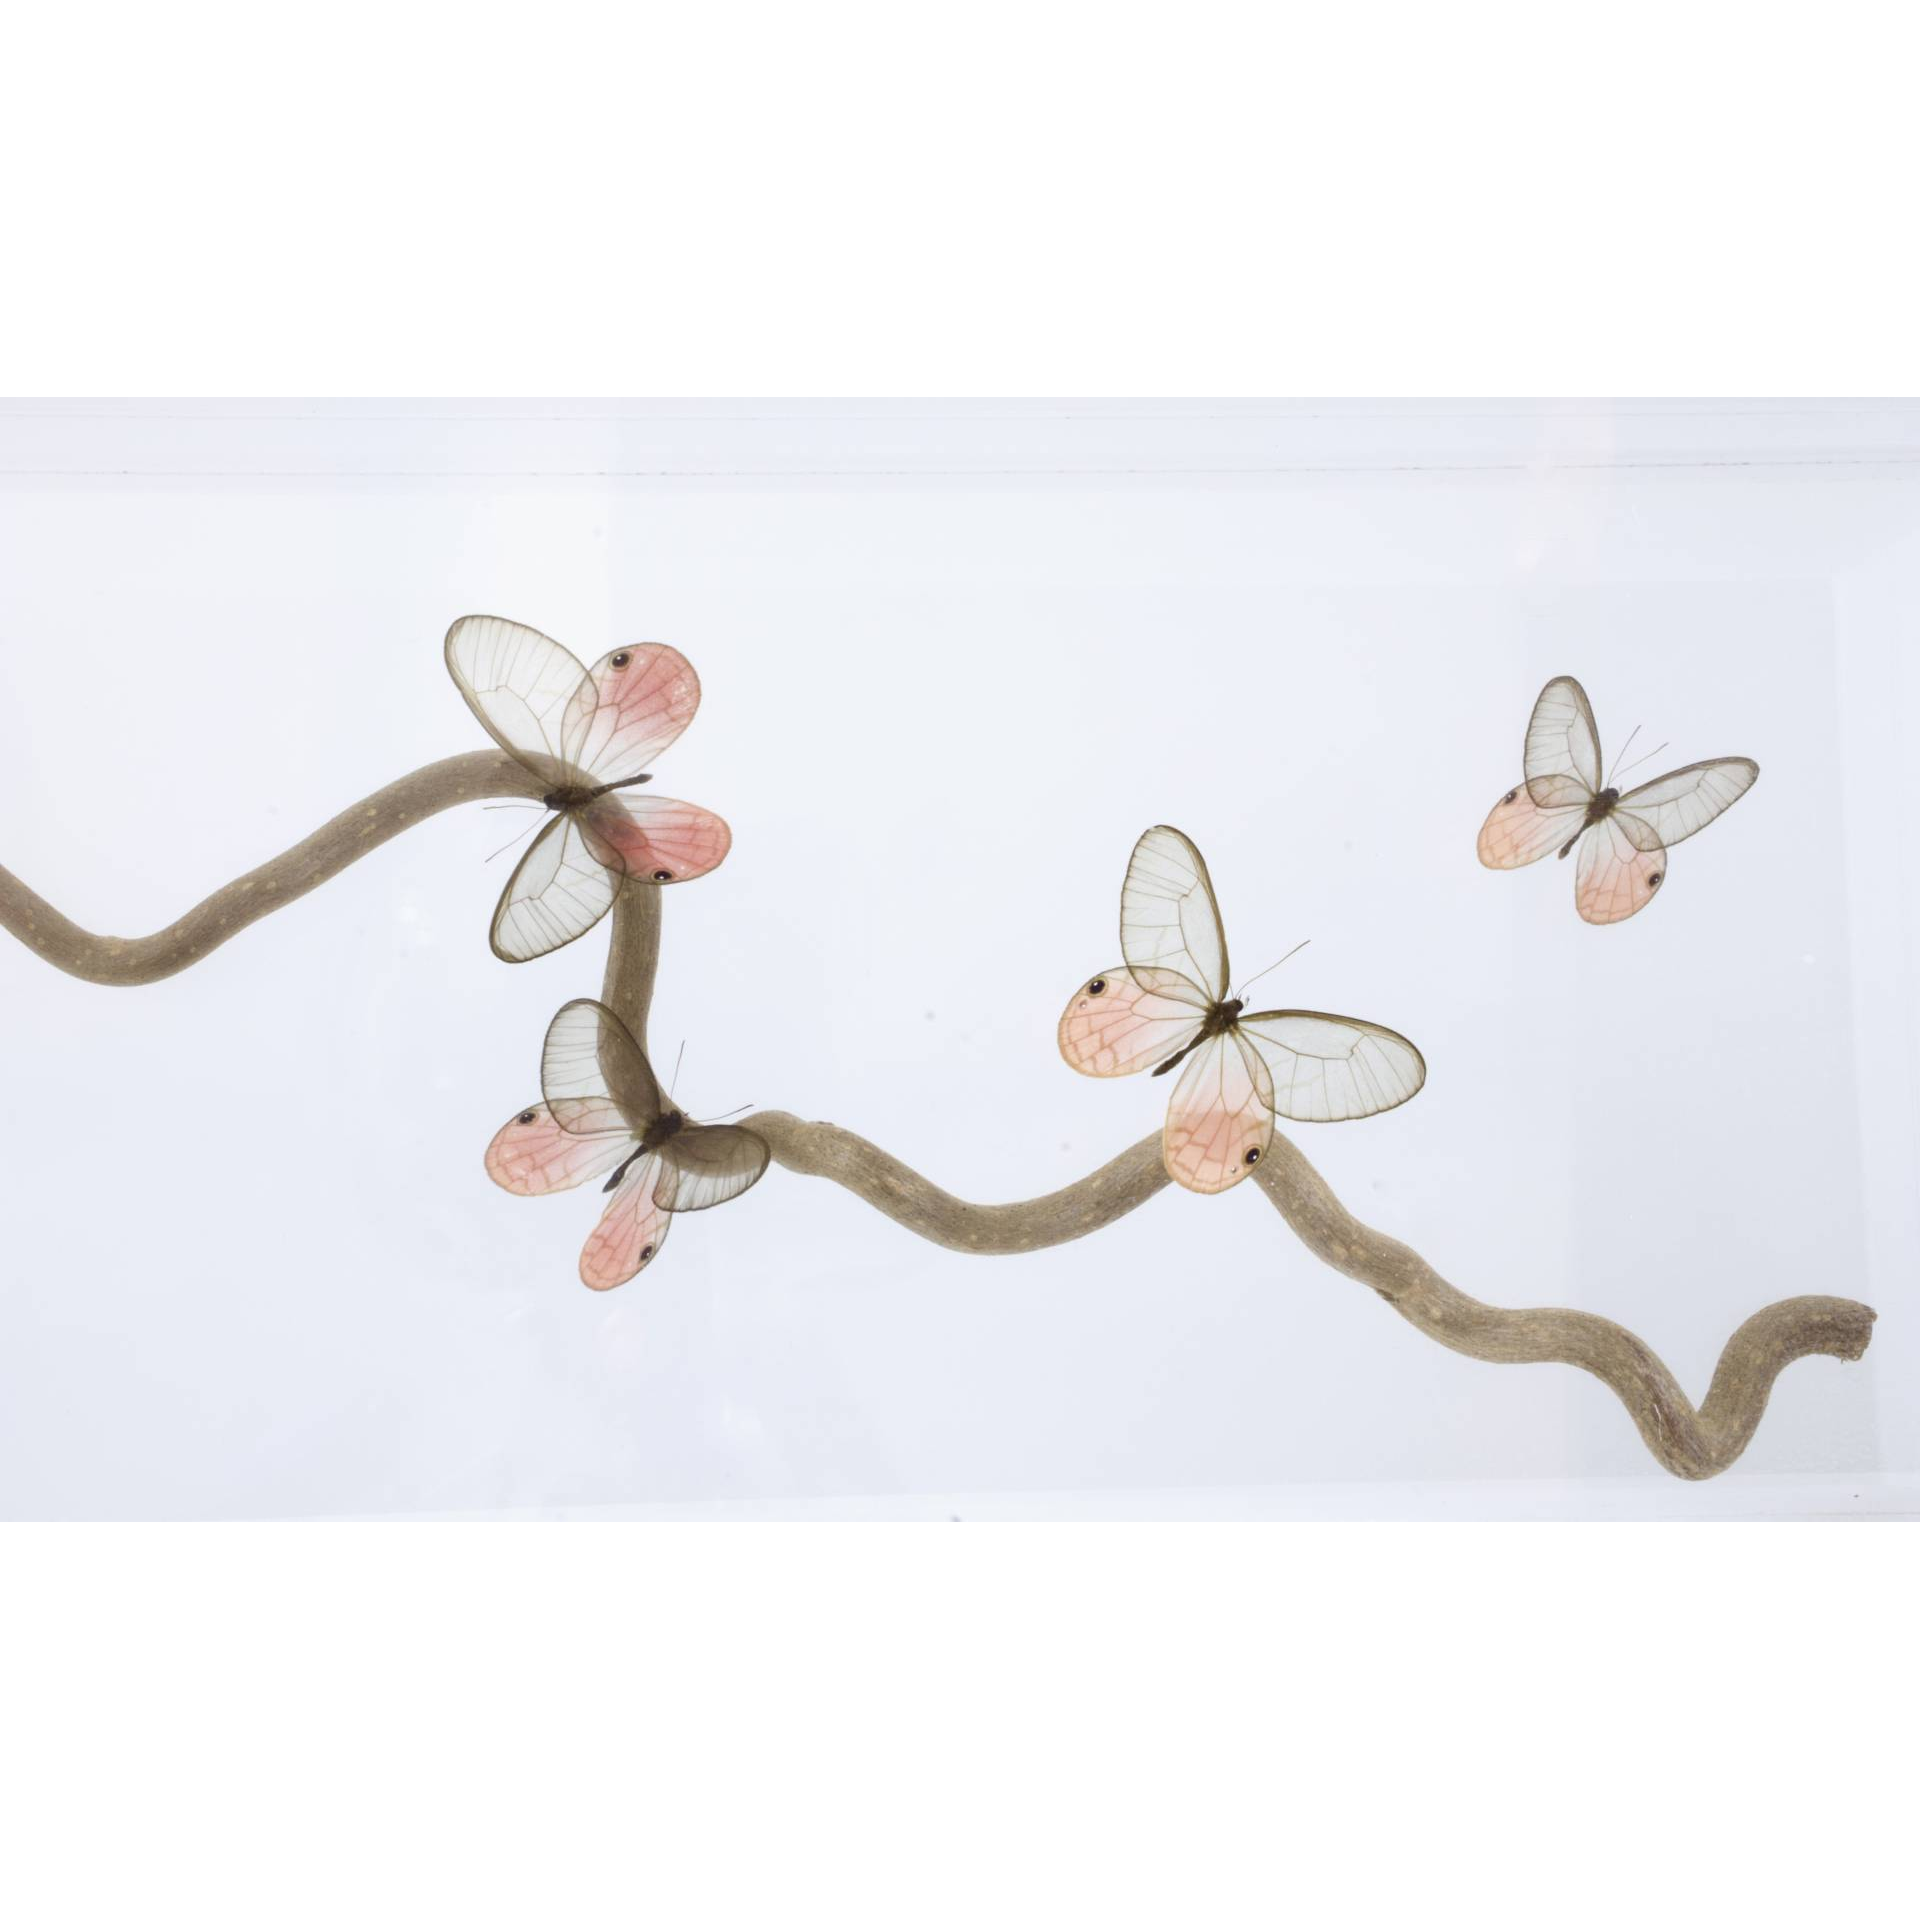 Jean-Luc MANIOULOUX, Sakura, Insectes naturalisés, papillons (Cymothoe Aurorina ), branche d'arbre, 19 X 61 X 14 cm